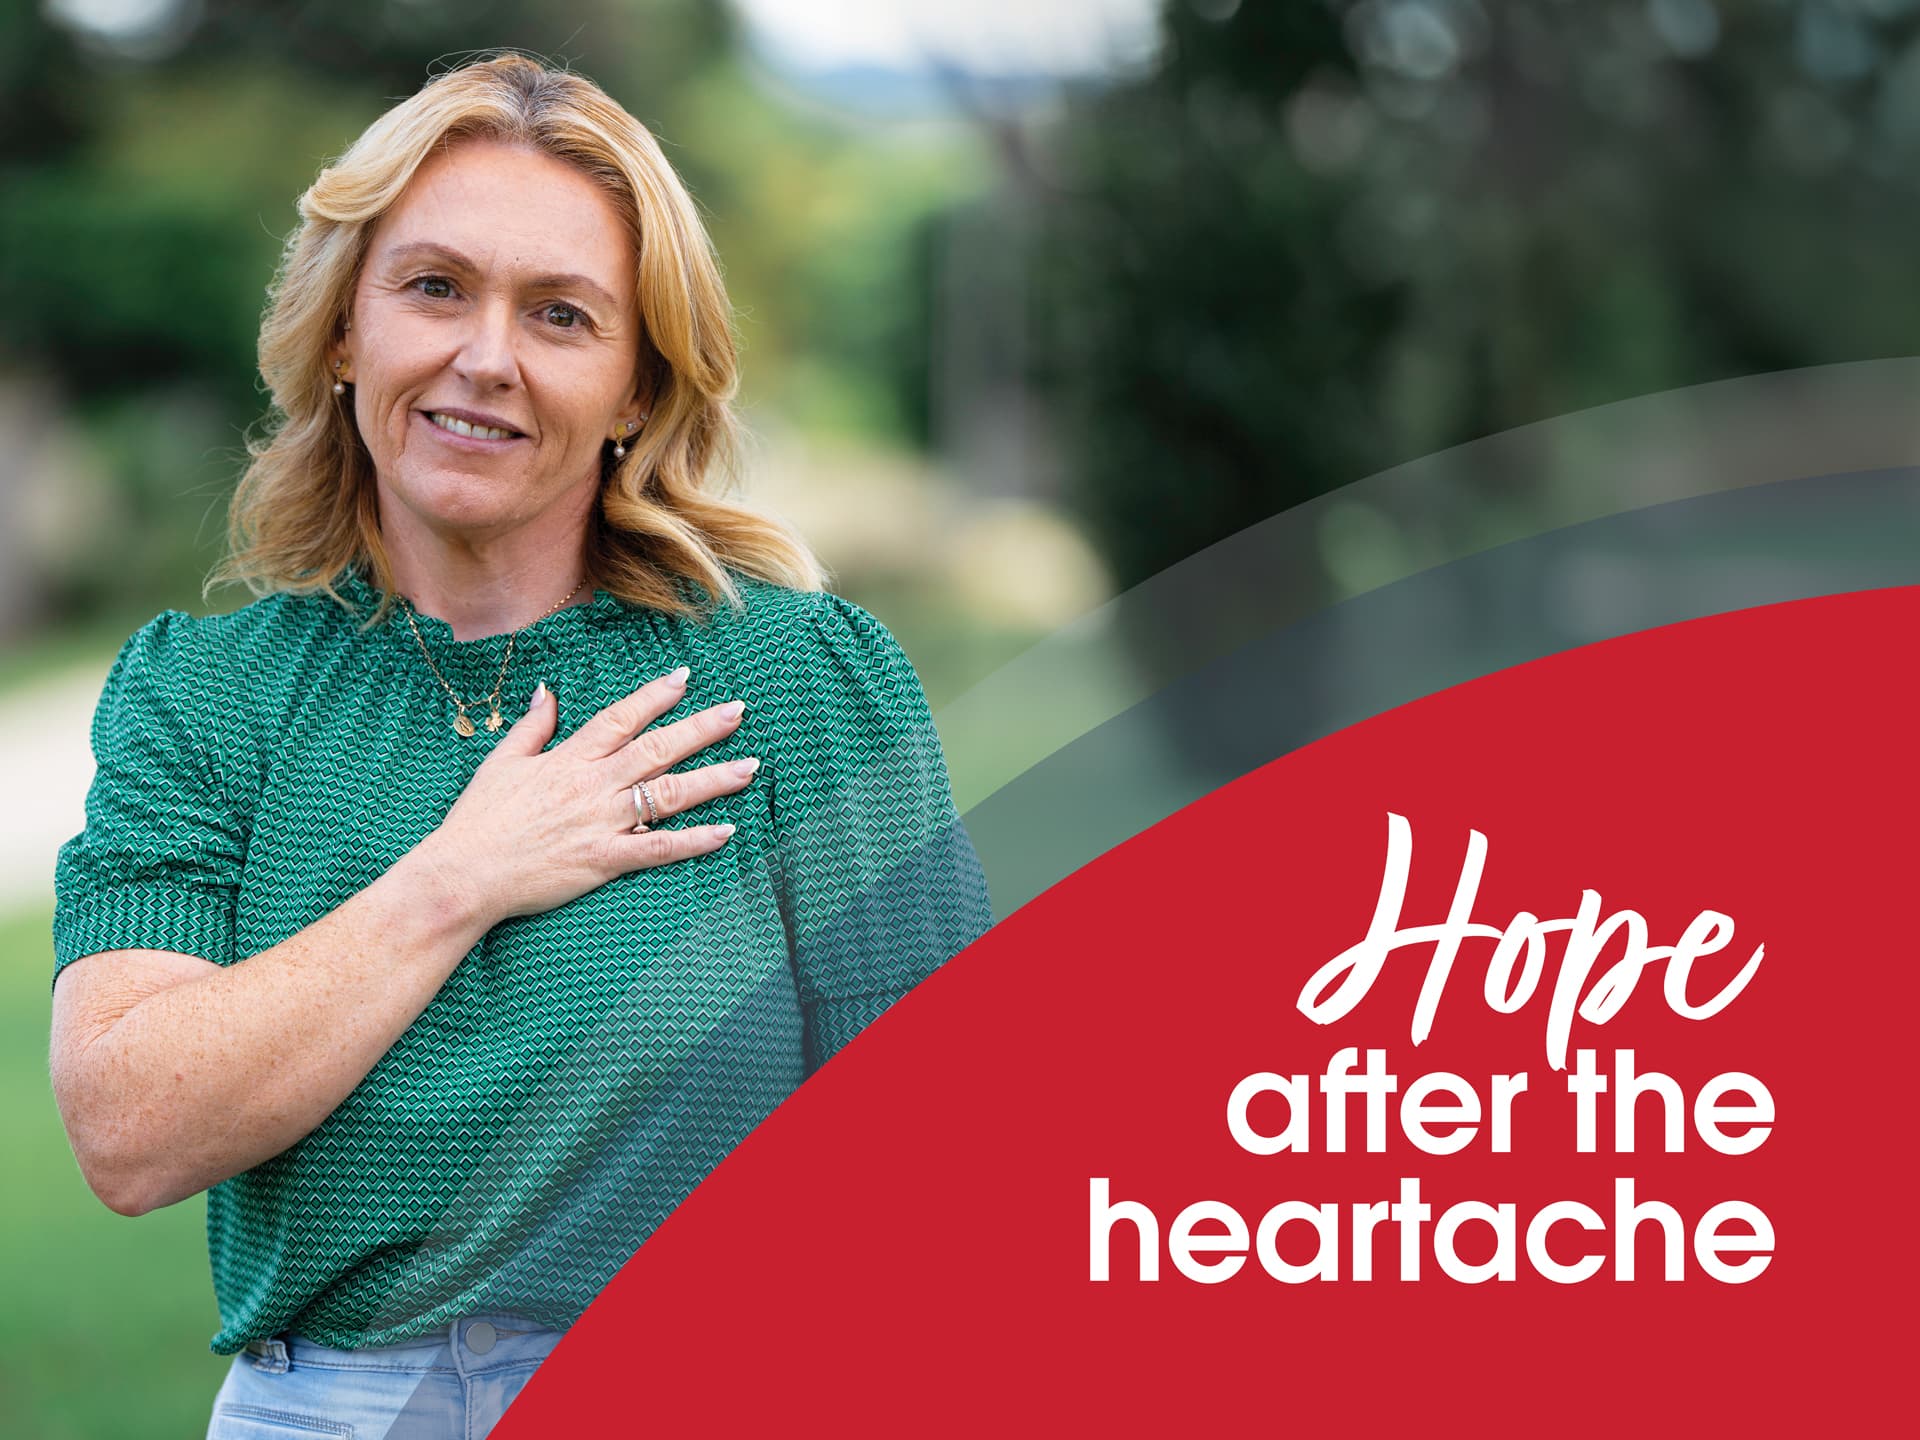 Heart attack survivor Nadene standing with hand on her heart